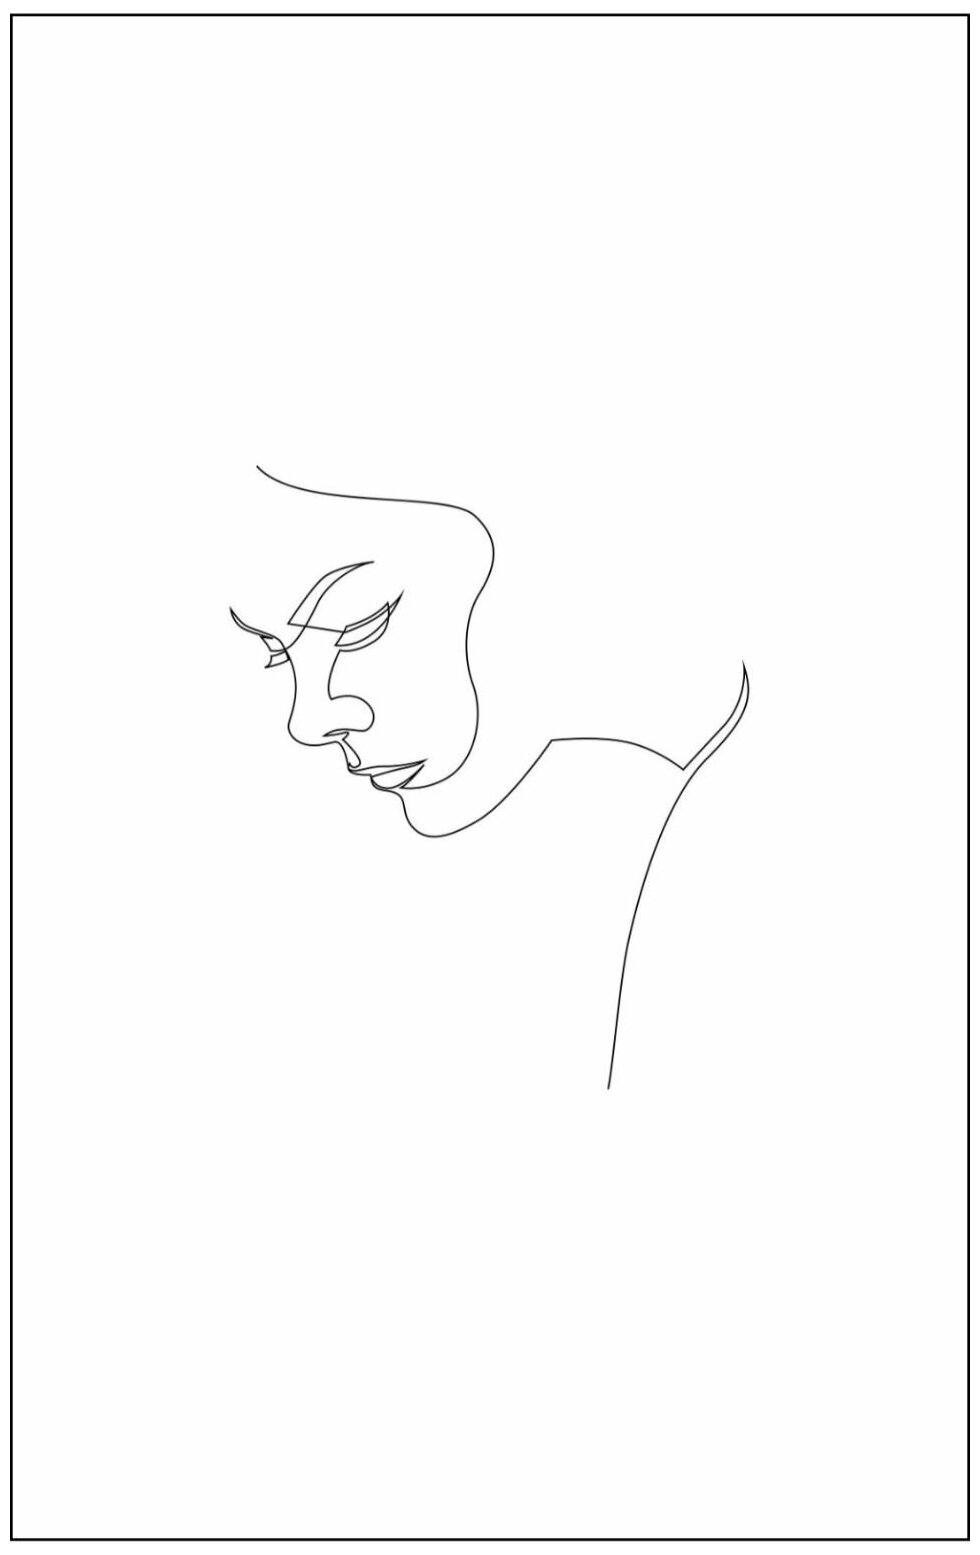 Постер / Плакат / Картина на холсте Линии - Силуэт женского лица 40x50 см в подарочном тубусе